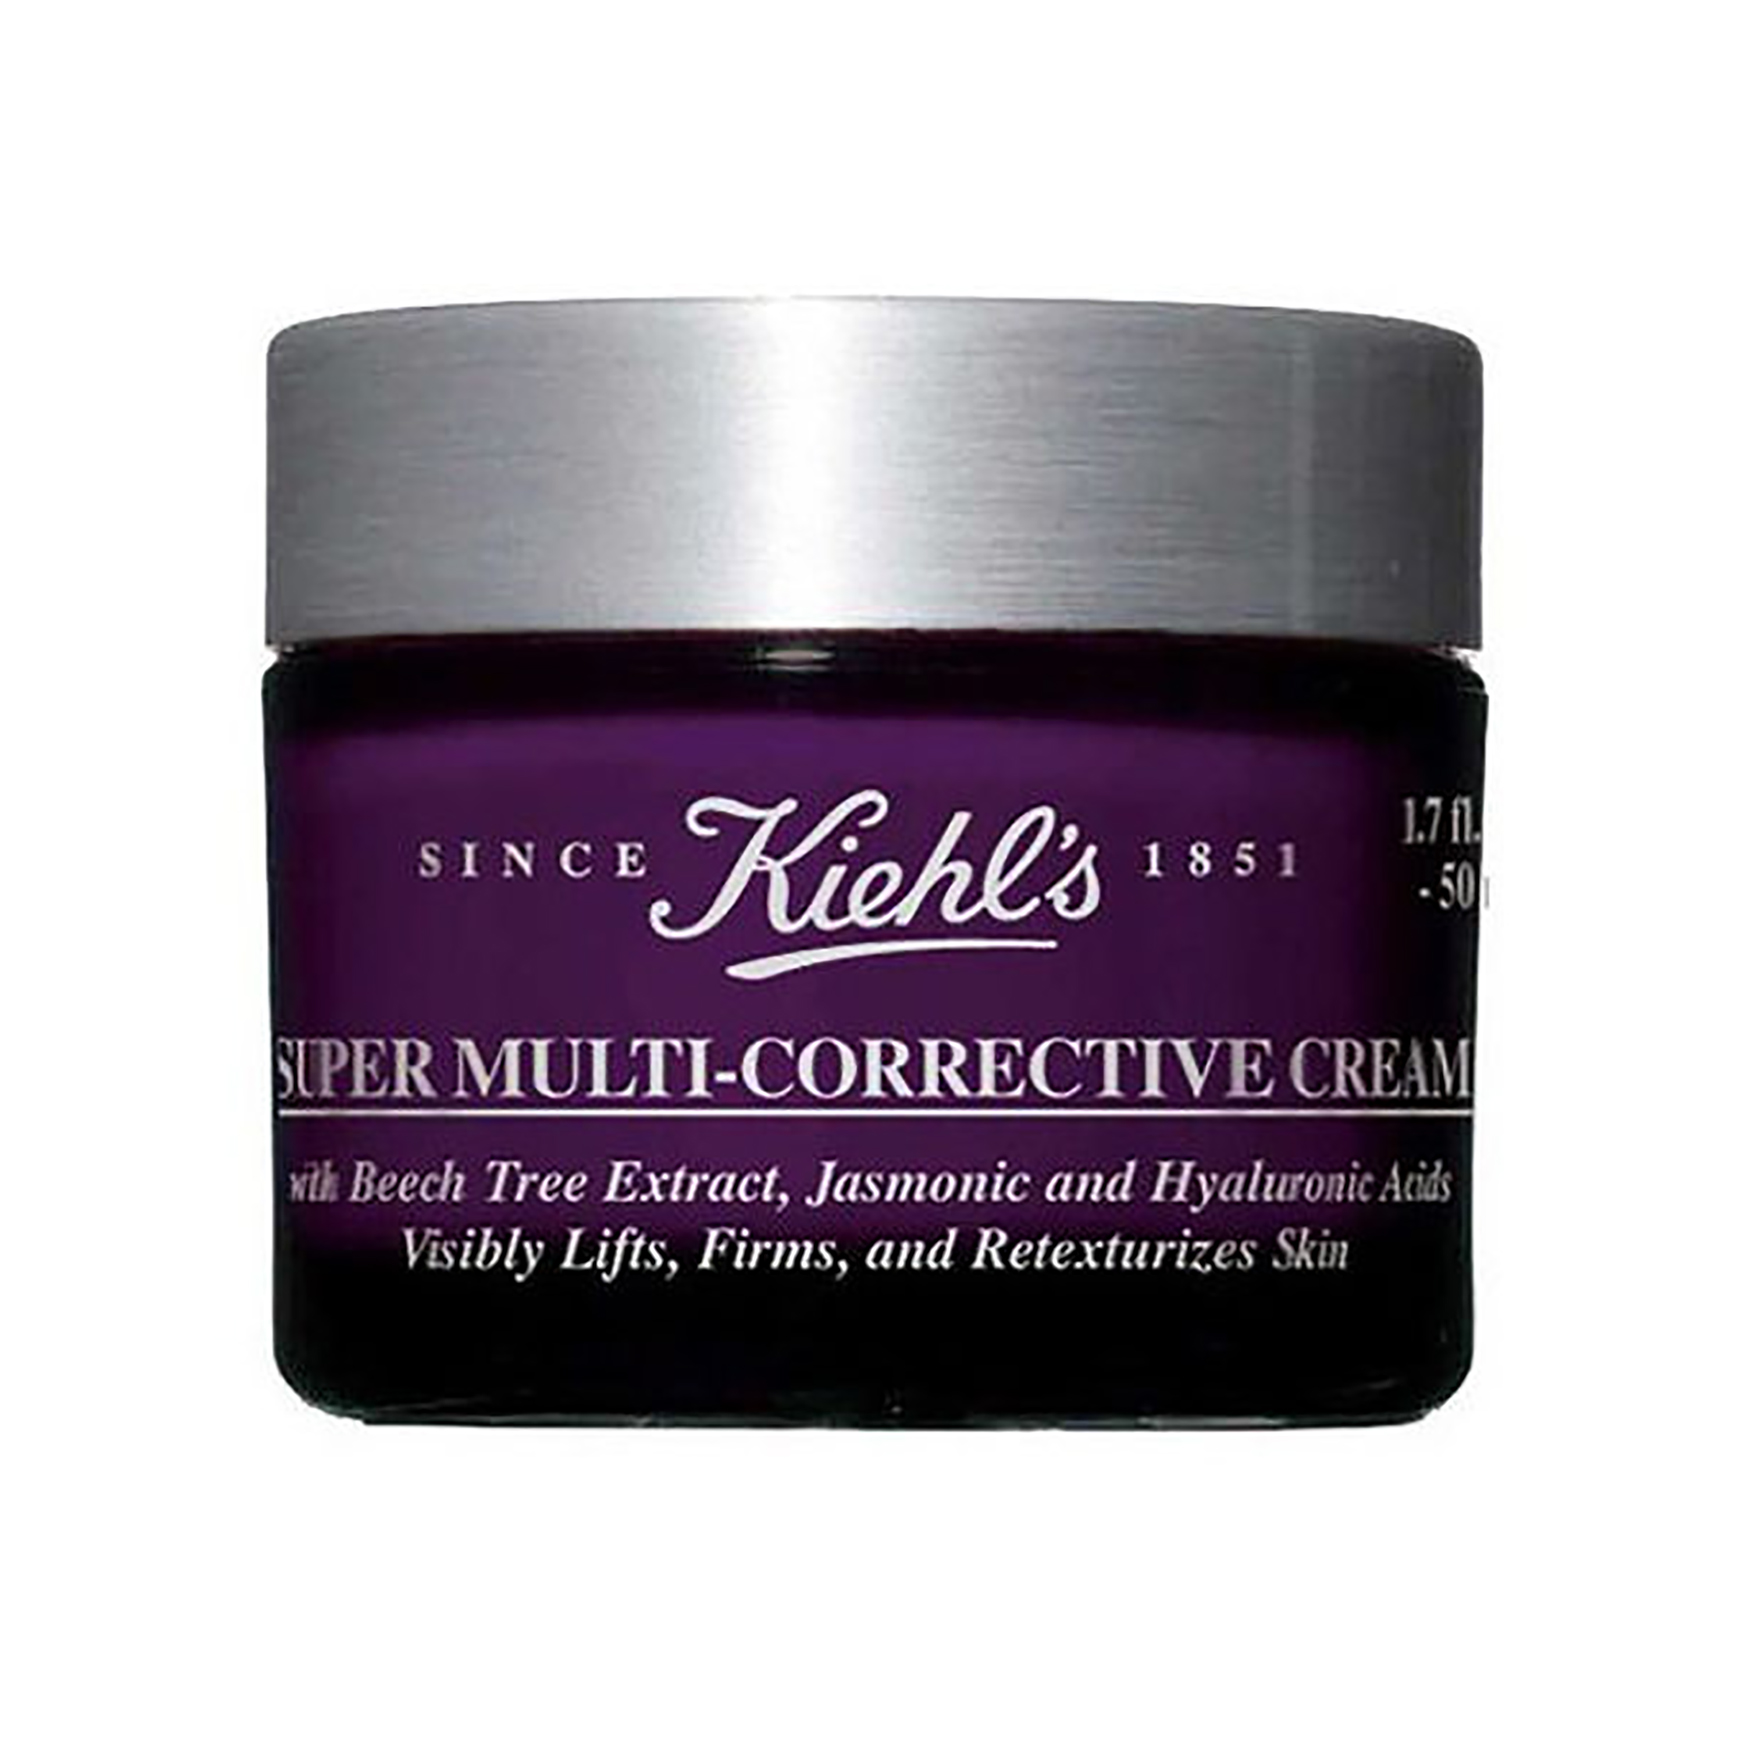 super multi corrective anti aging cream for face and neck)